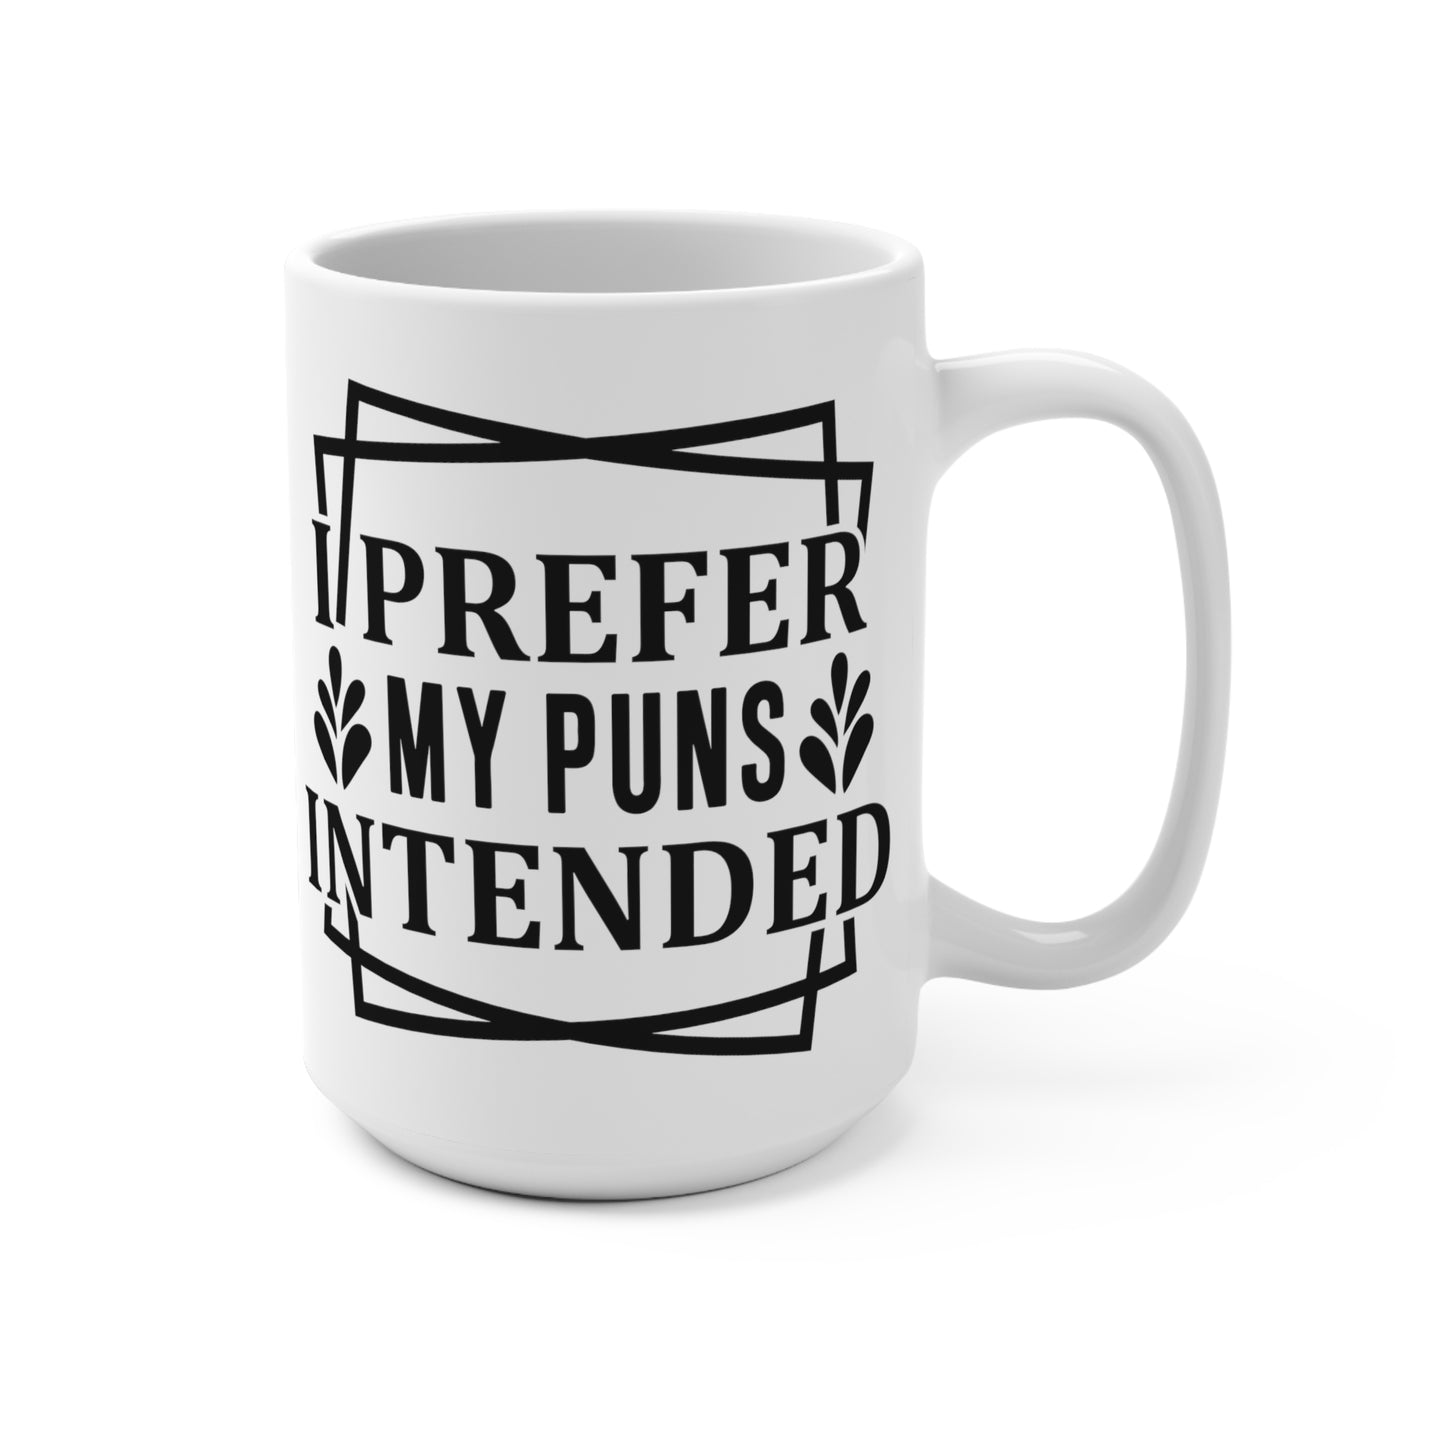 Funny Coffee Mug, I Prefer My Puns Intended Humorous Quote, Pun Lover Gift, Black and White Mug, Office Mug, Novelty Mug for Friends